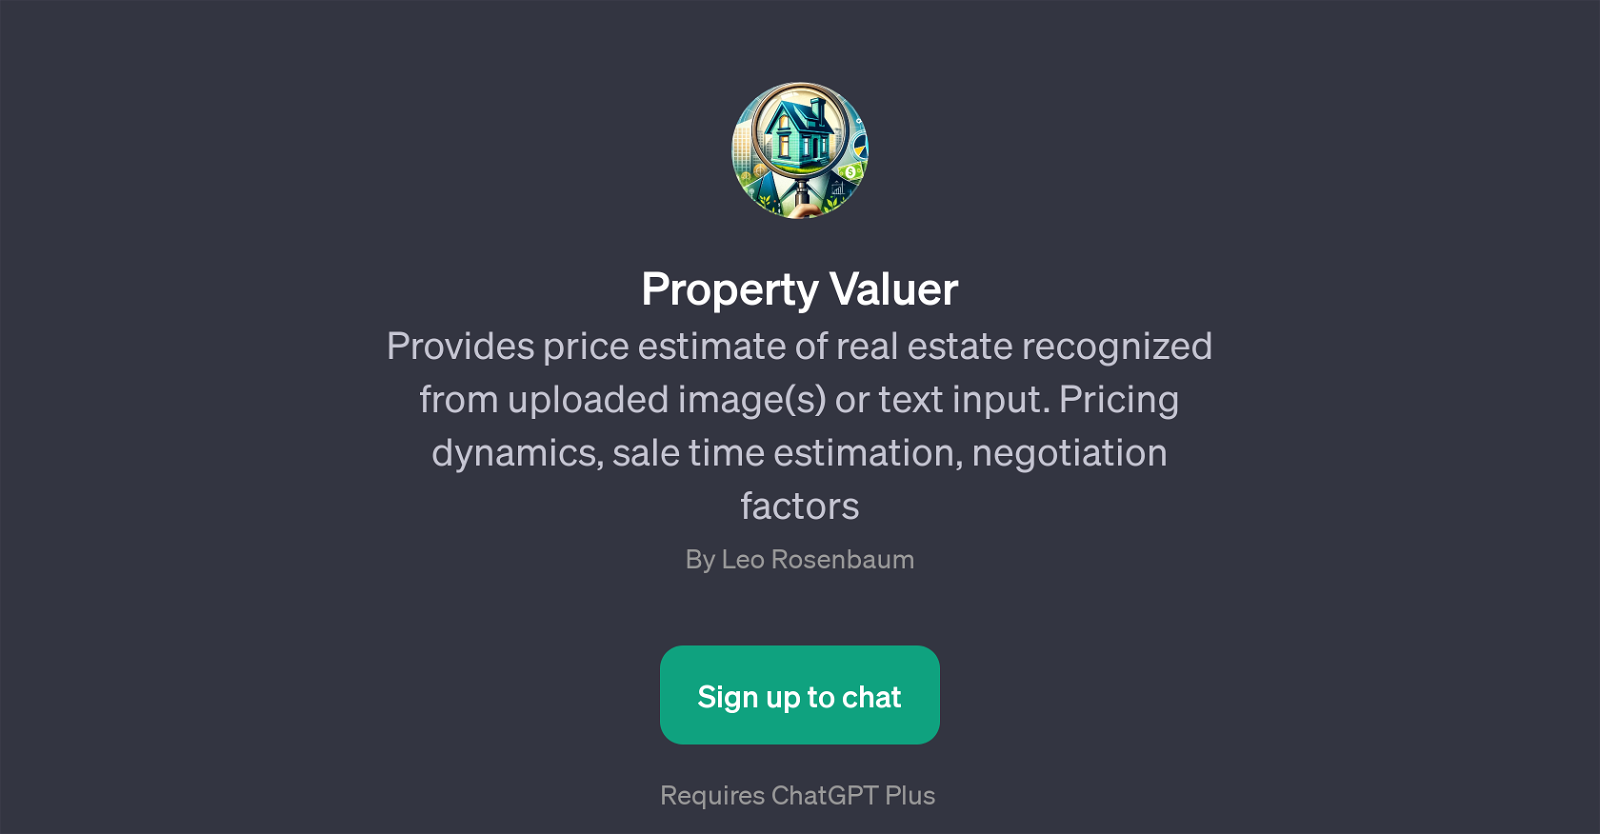 Property Valuer website